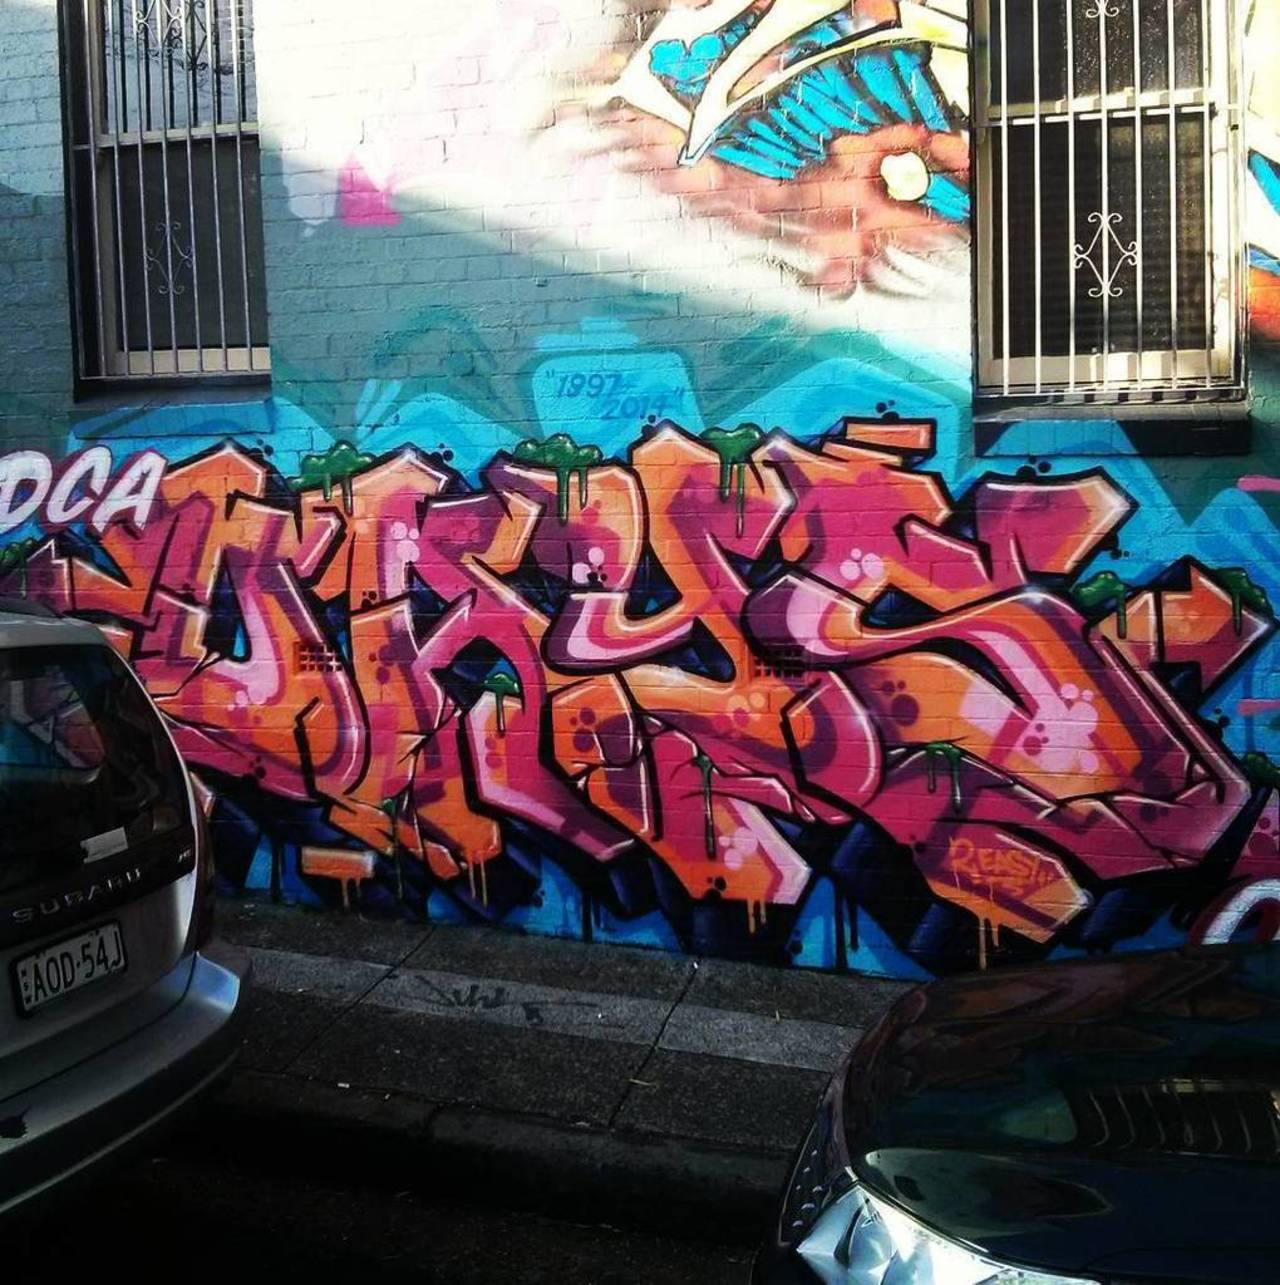 Days #ifttt #sydney #sydneygraffiti #newtown #rsa_graffiti #arteurbano #streetart #graffiti #graffiso http://t.co/lLqHcnP0jF